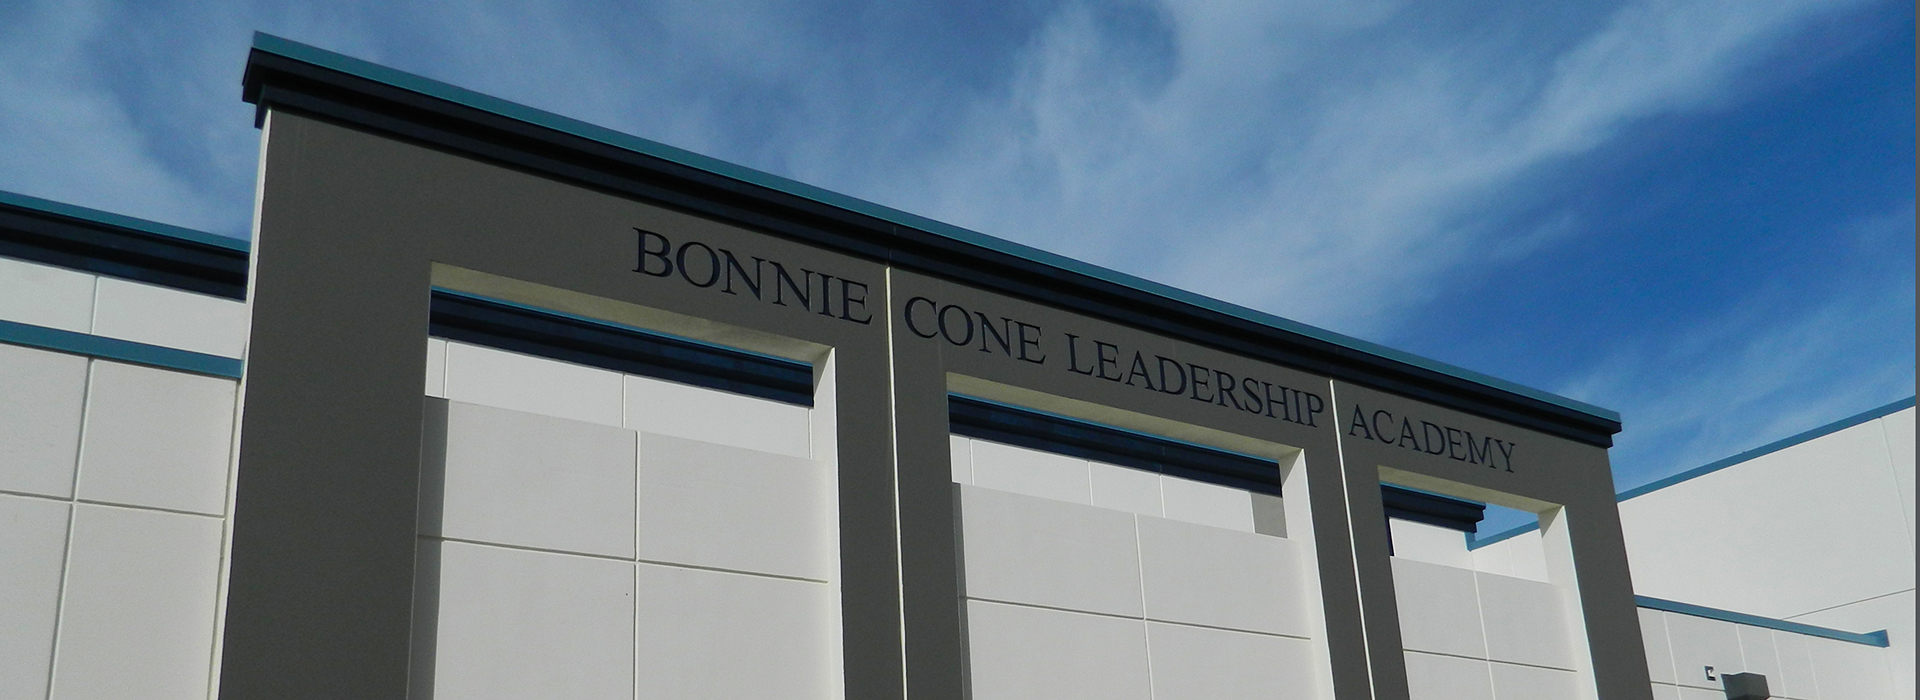 Bonnie Cone Leadership Academy Exterior